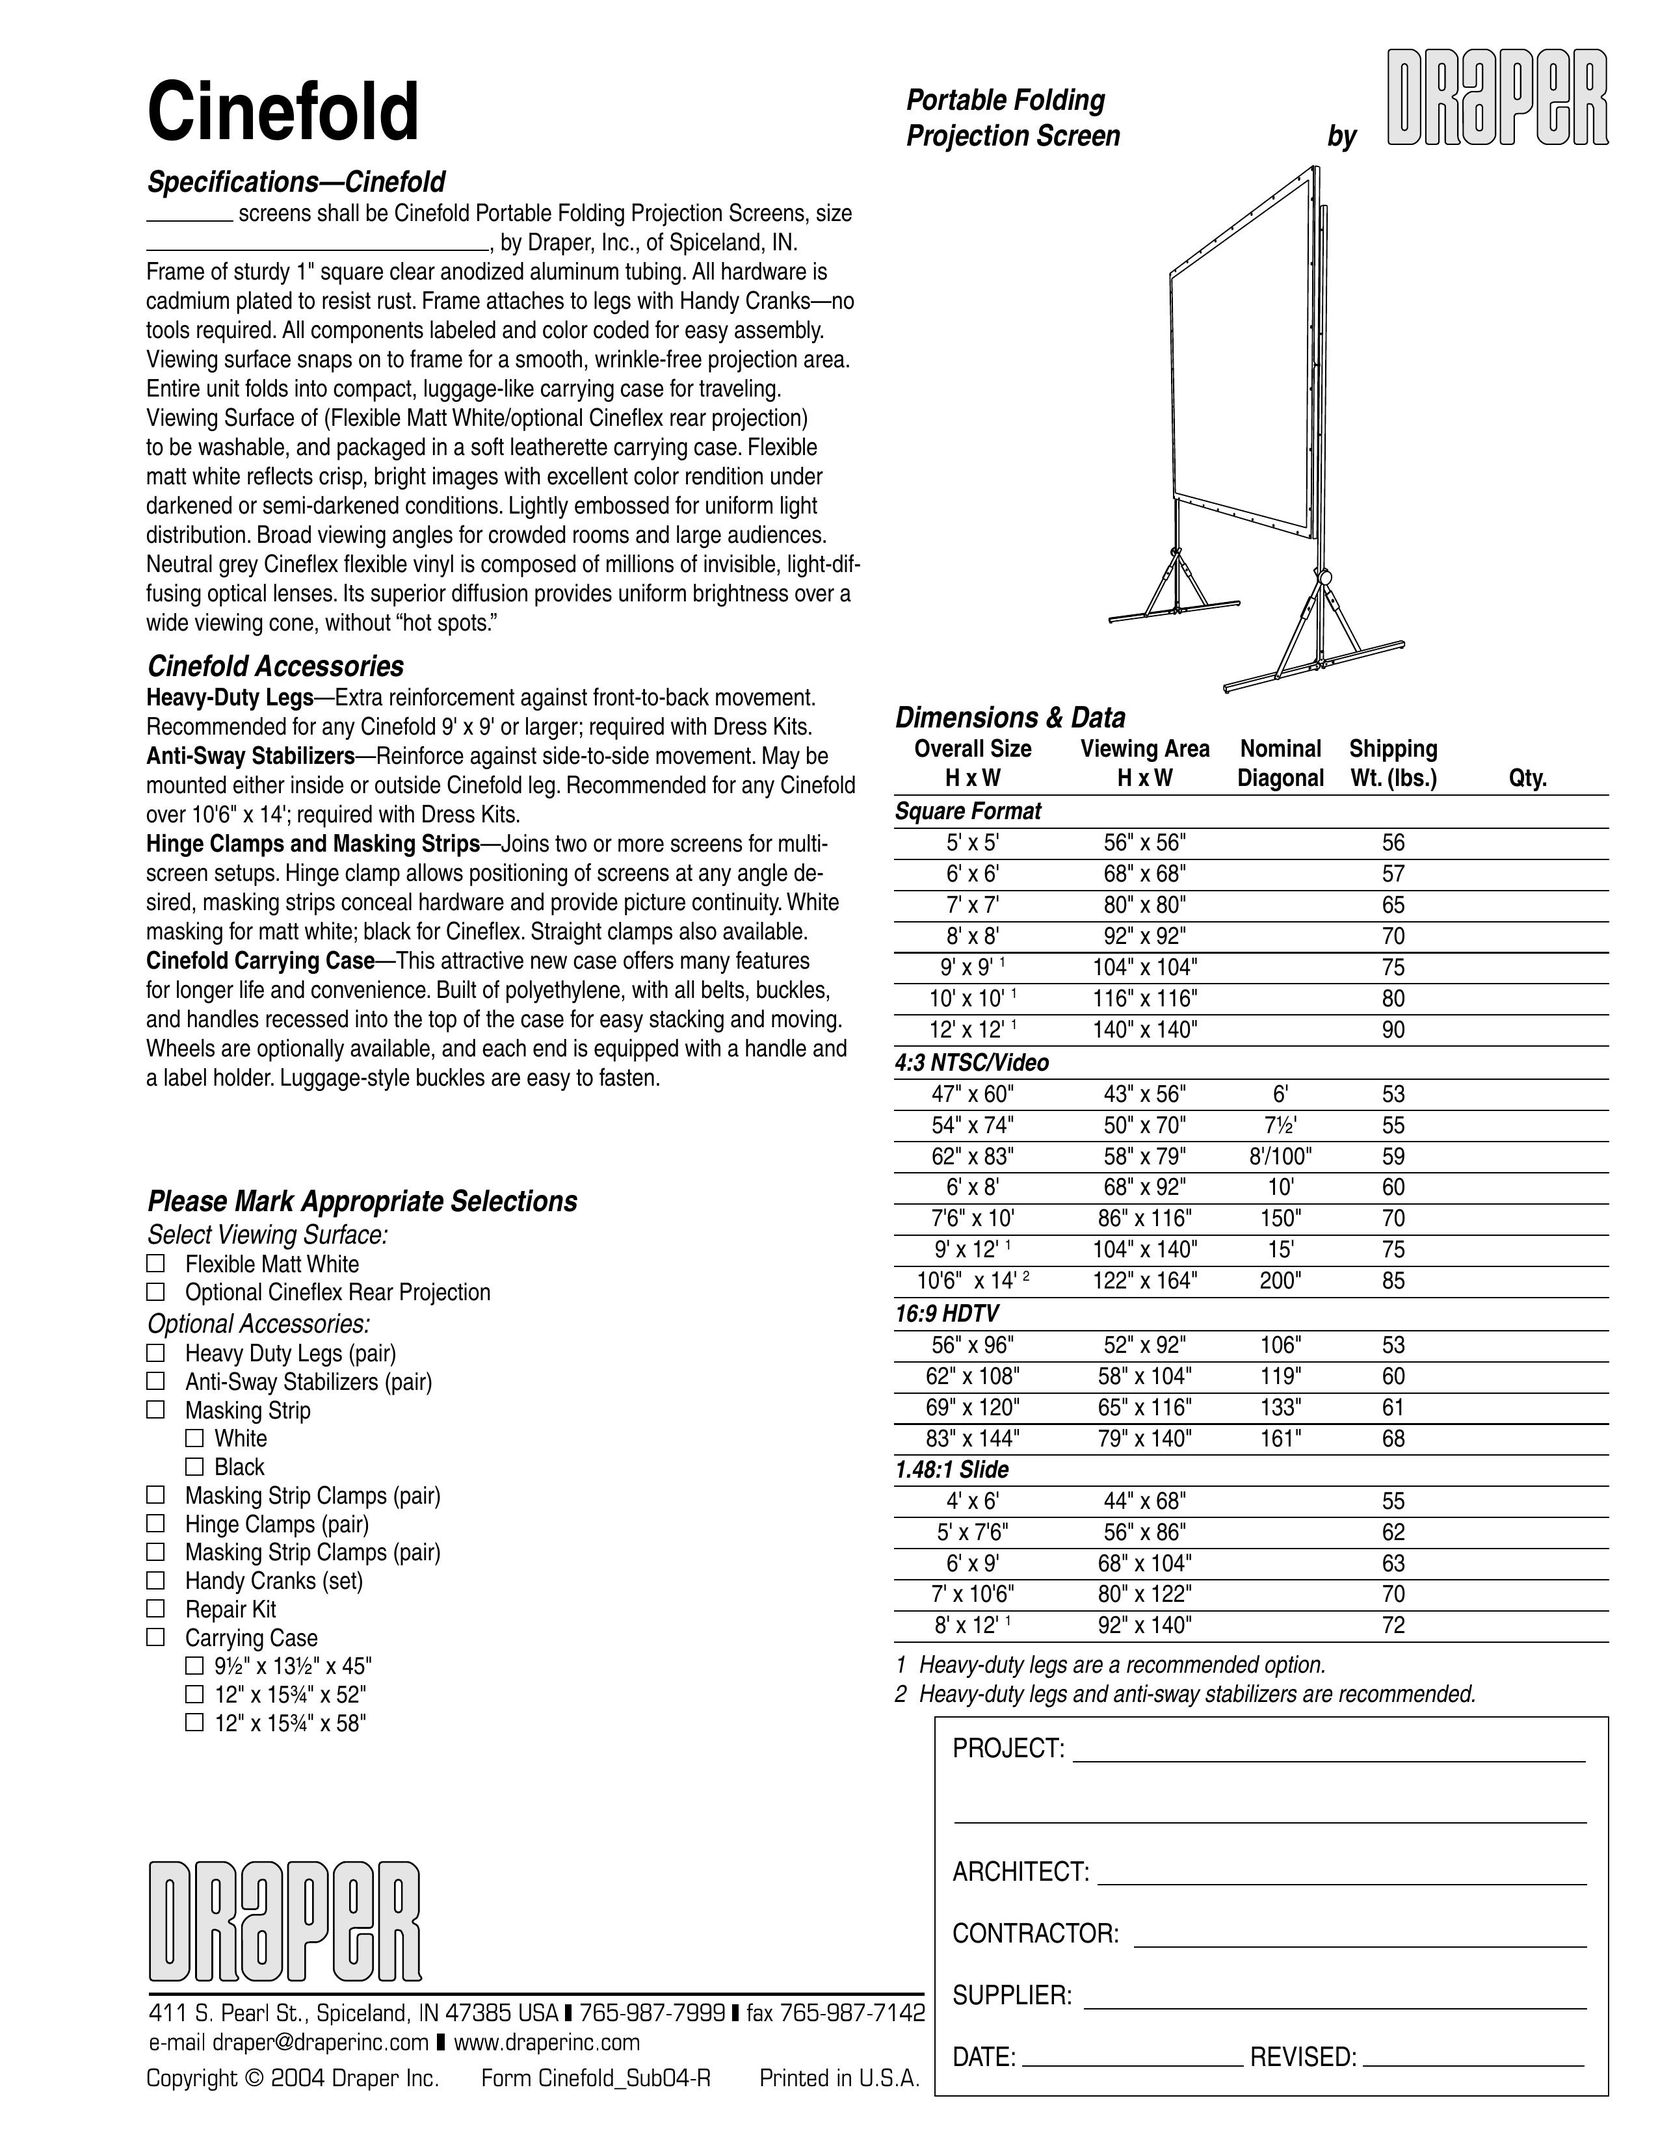 Draper Portable Folding Projection Screen Home Theater Screen User Manual